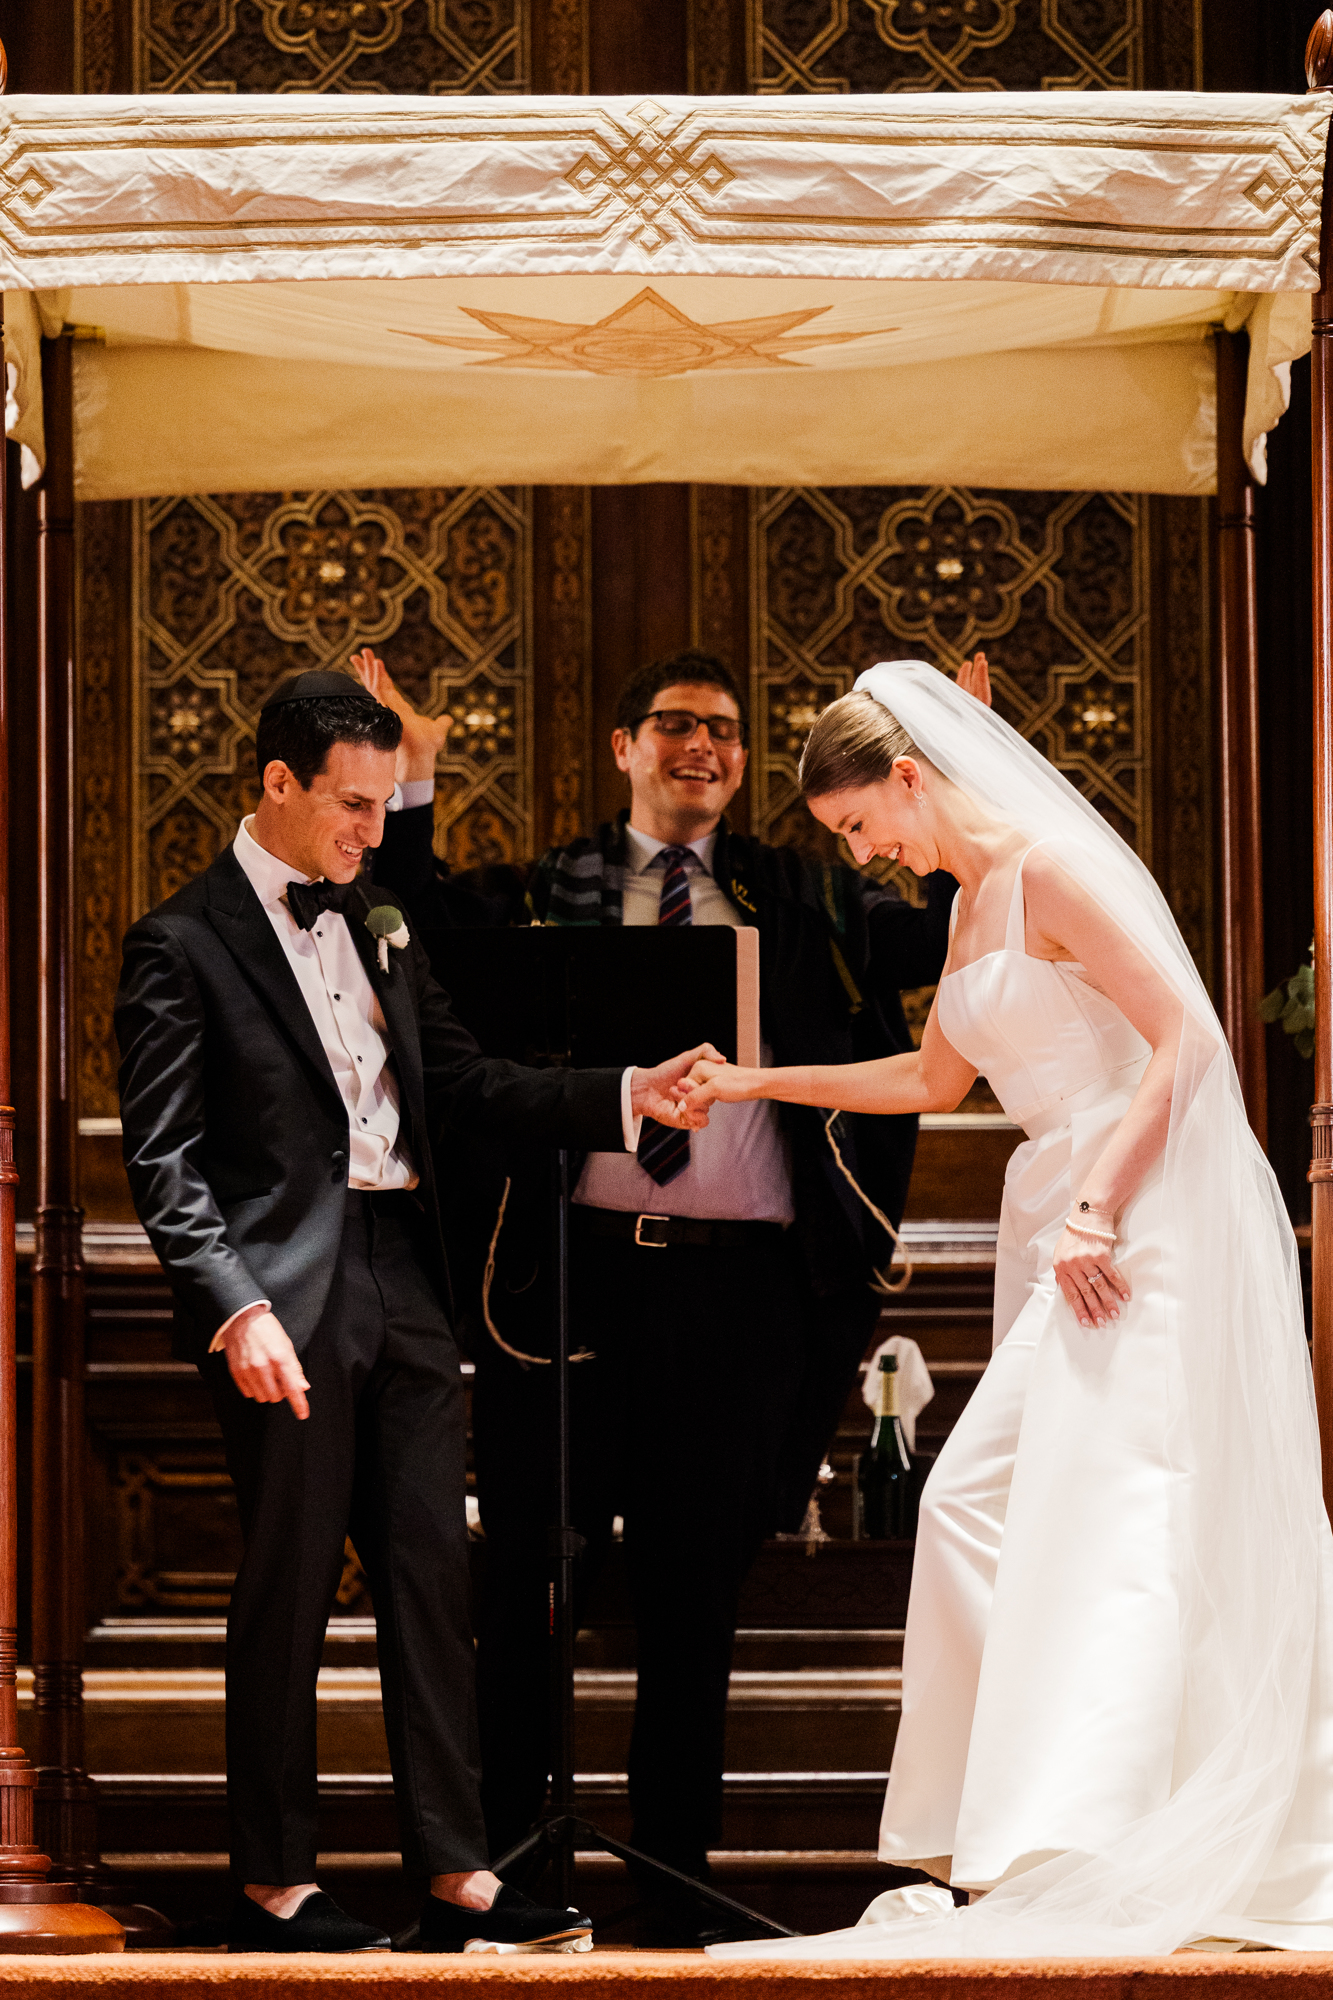 Striking Central Park Boathouse Wedding in New York